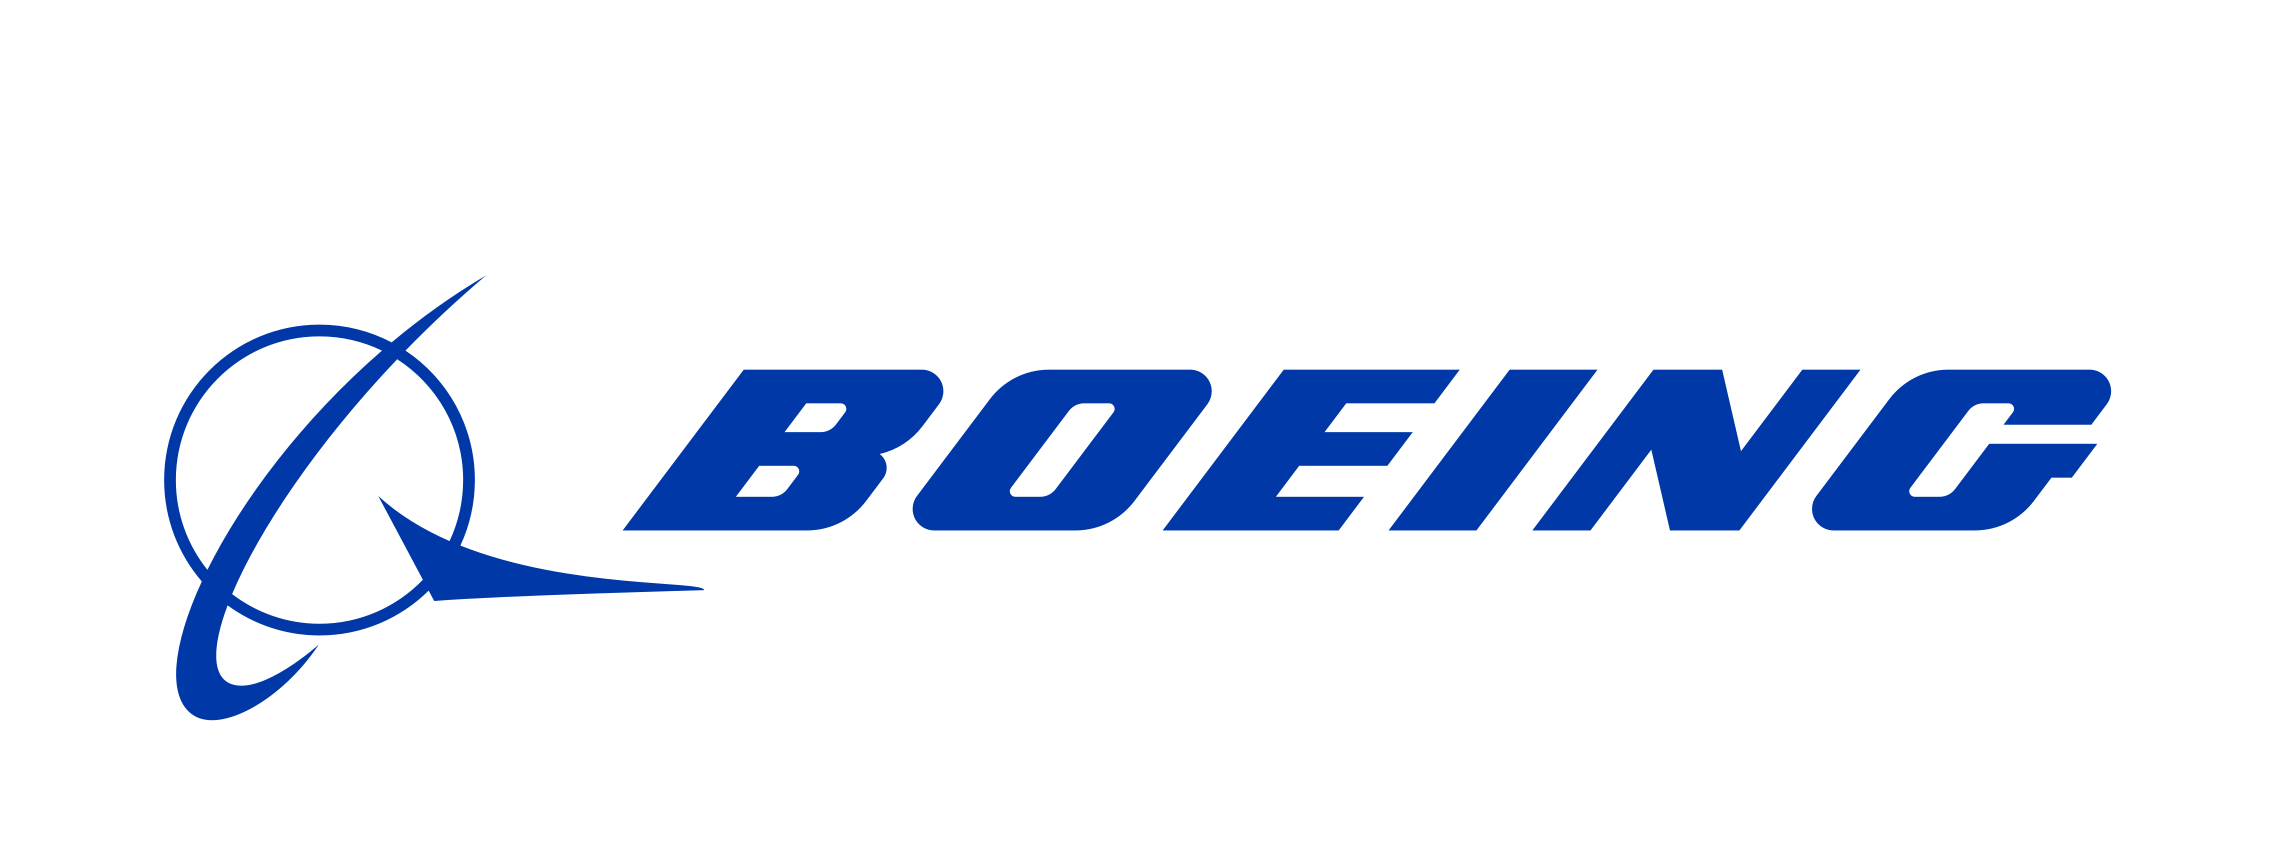 Boeing Wave Analysis – 13 January, 2020